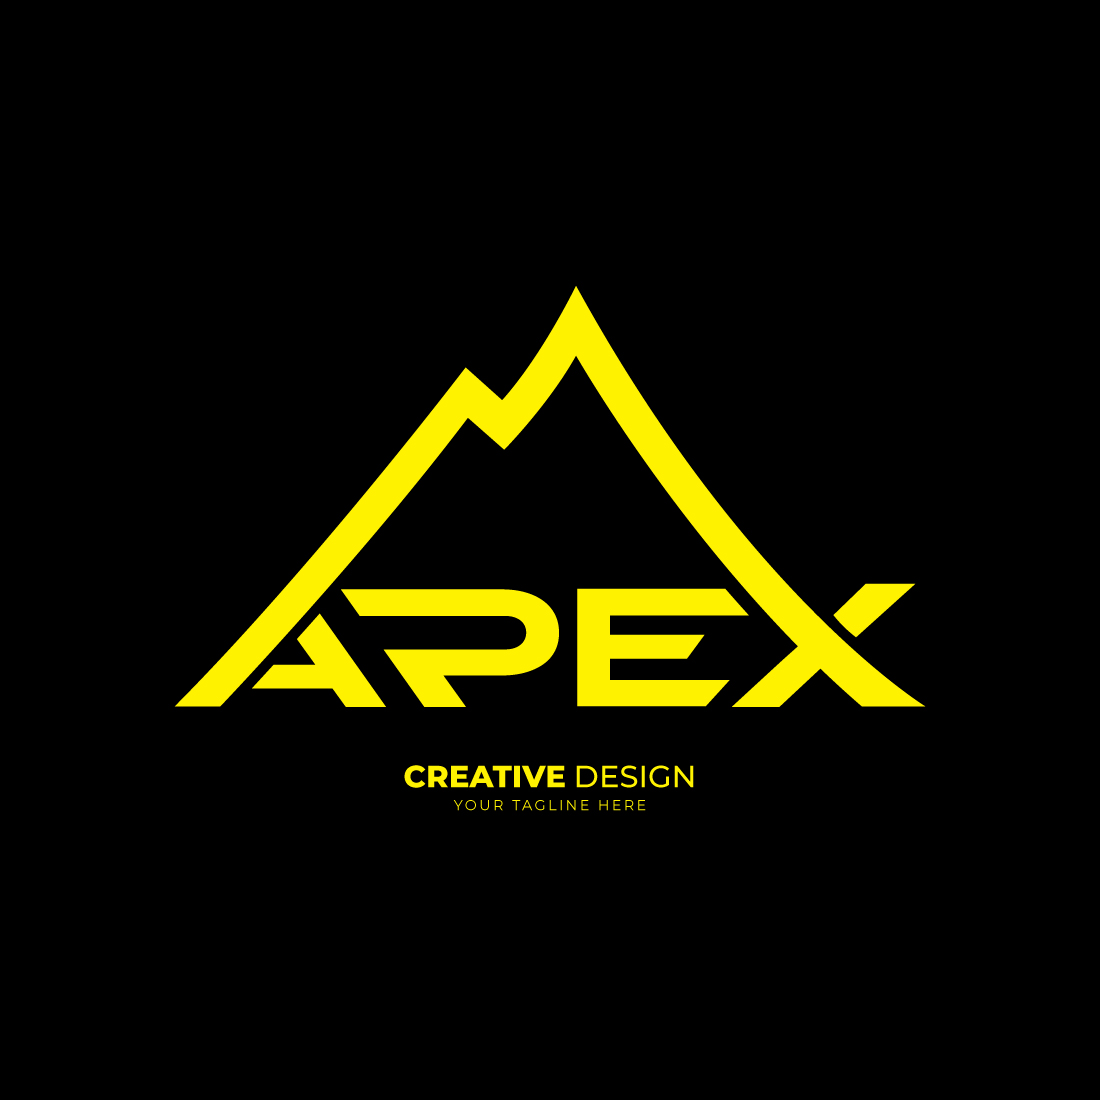 Apex Mountain logo preview image.